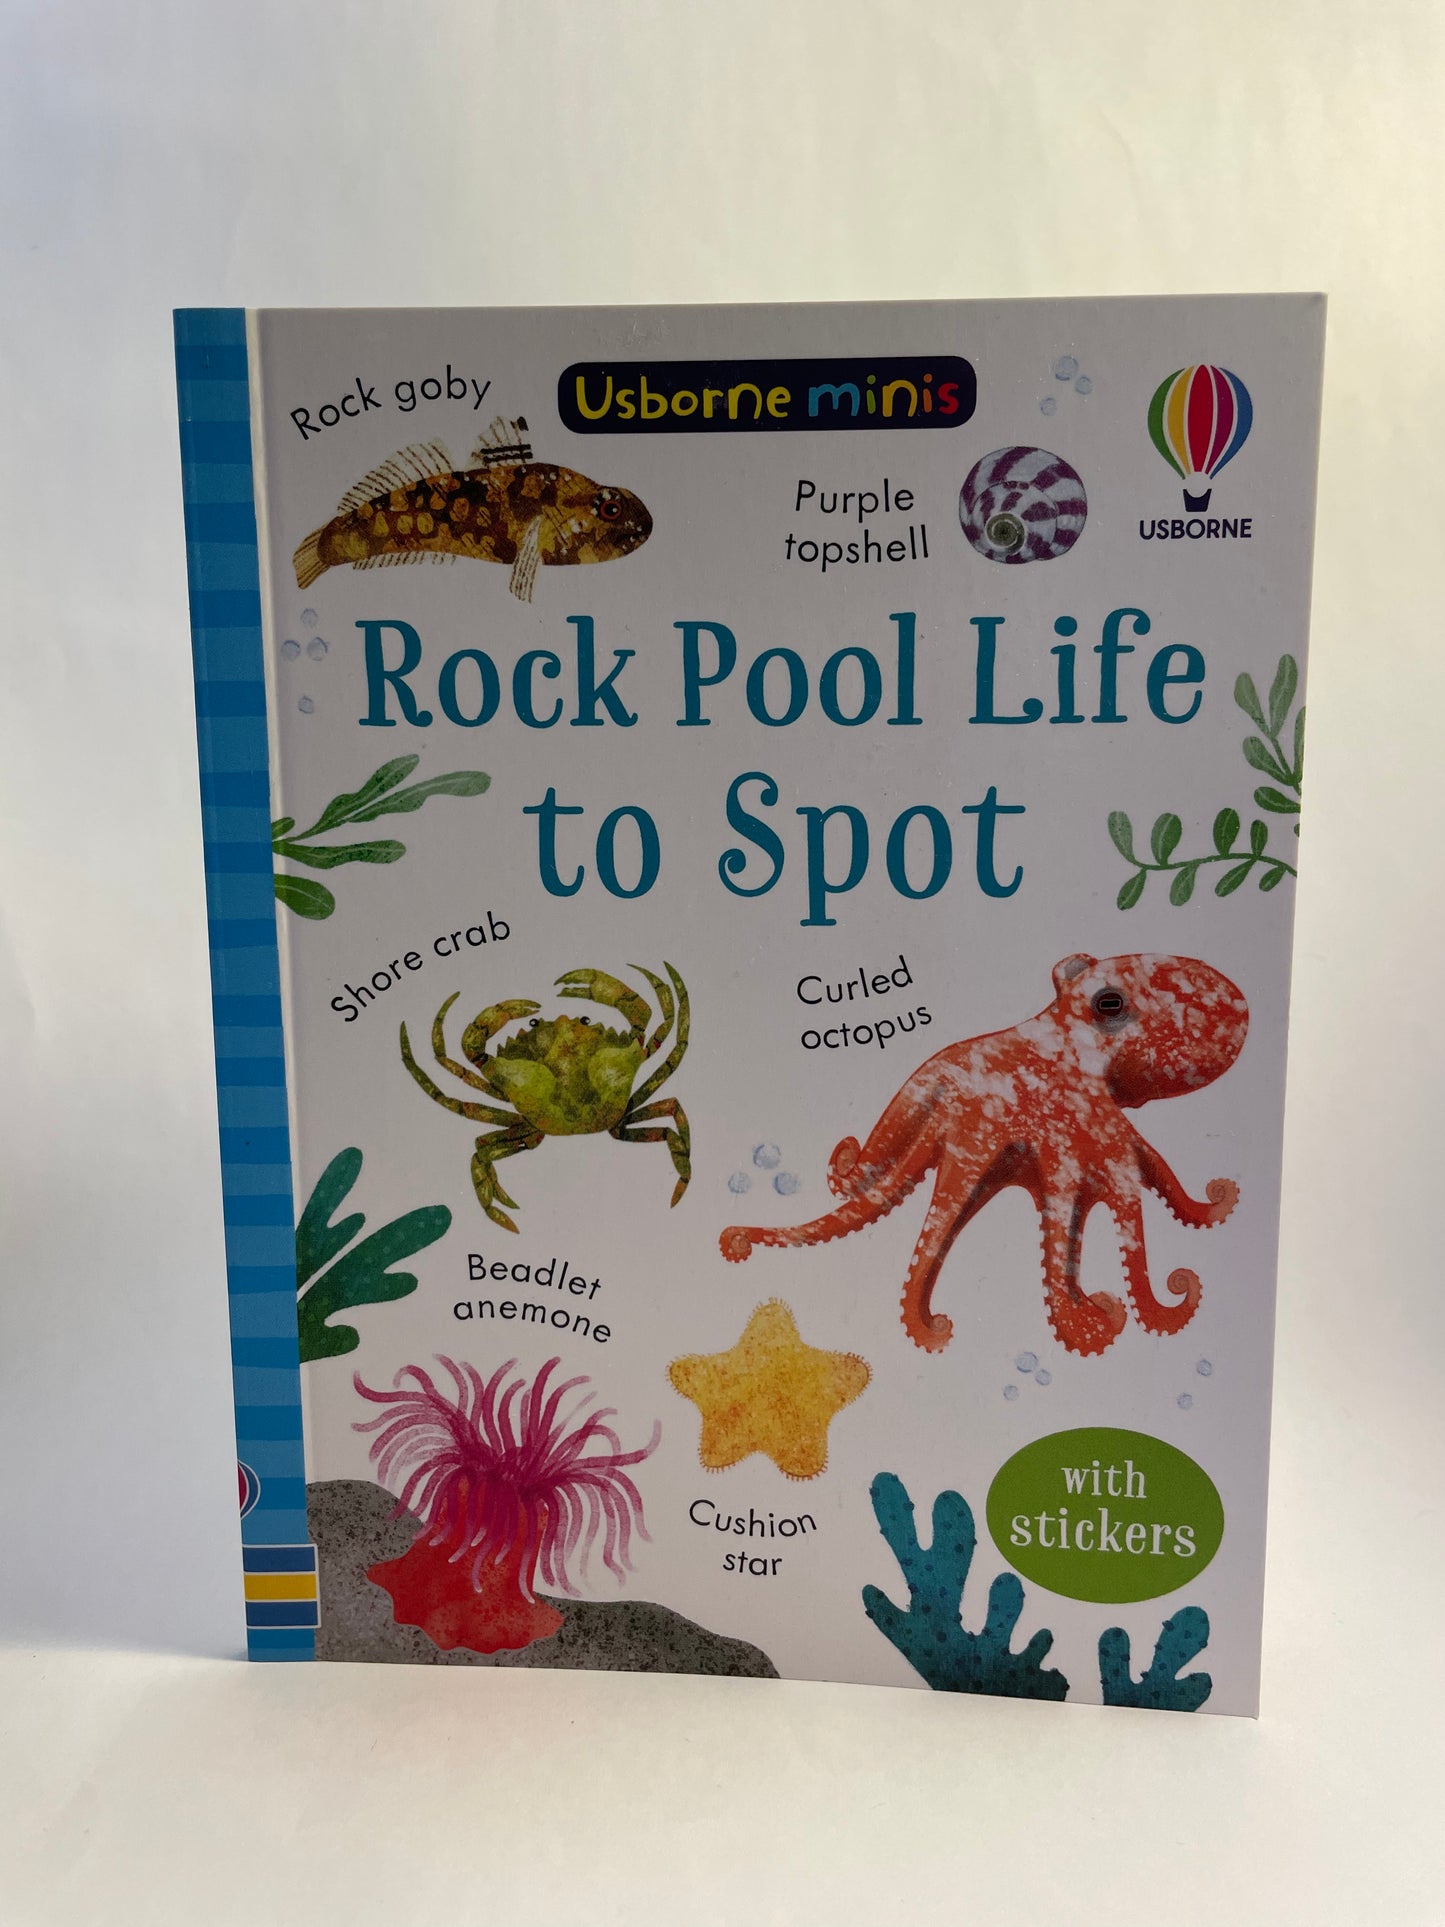 Rock Pool Life to Spot